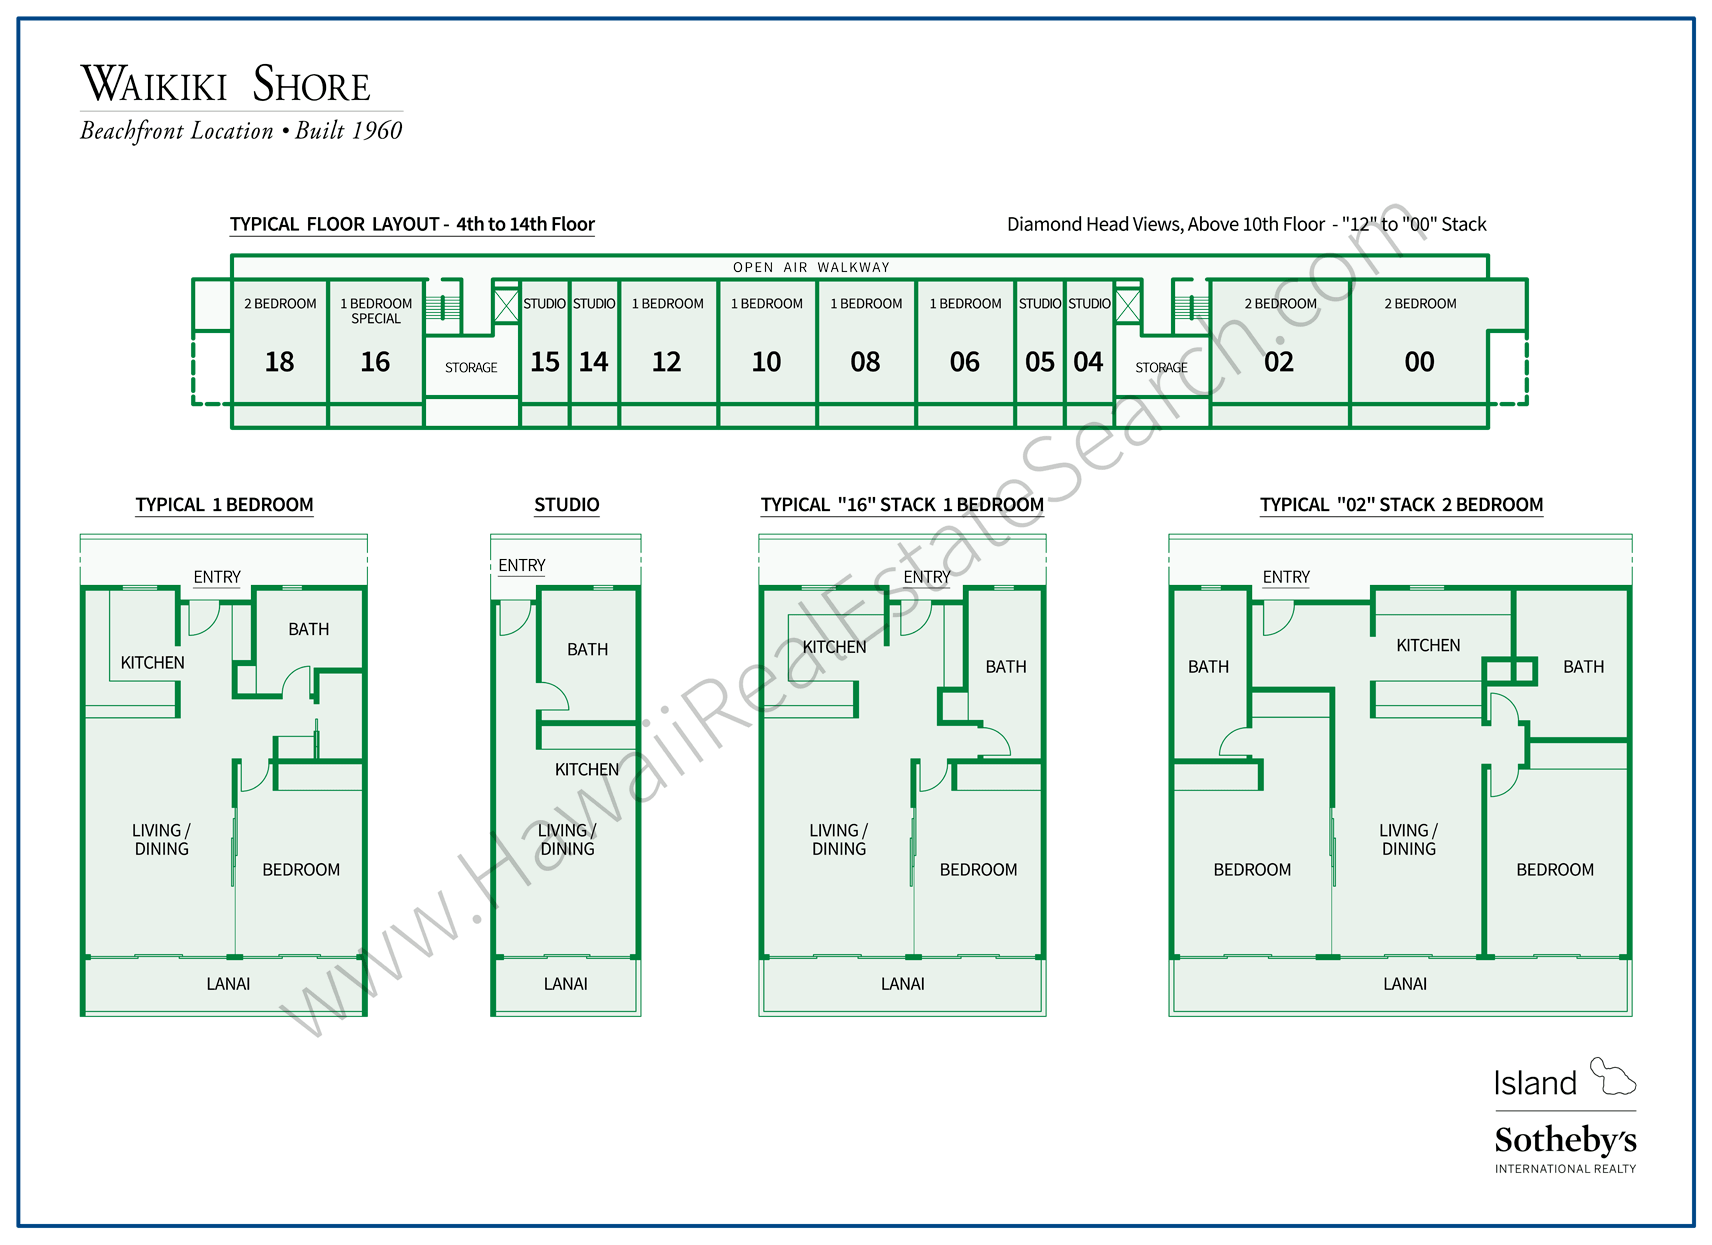 Waikiki Shore Condo Map and Floor Plan